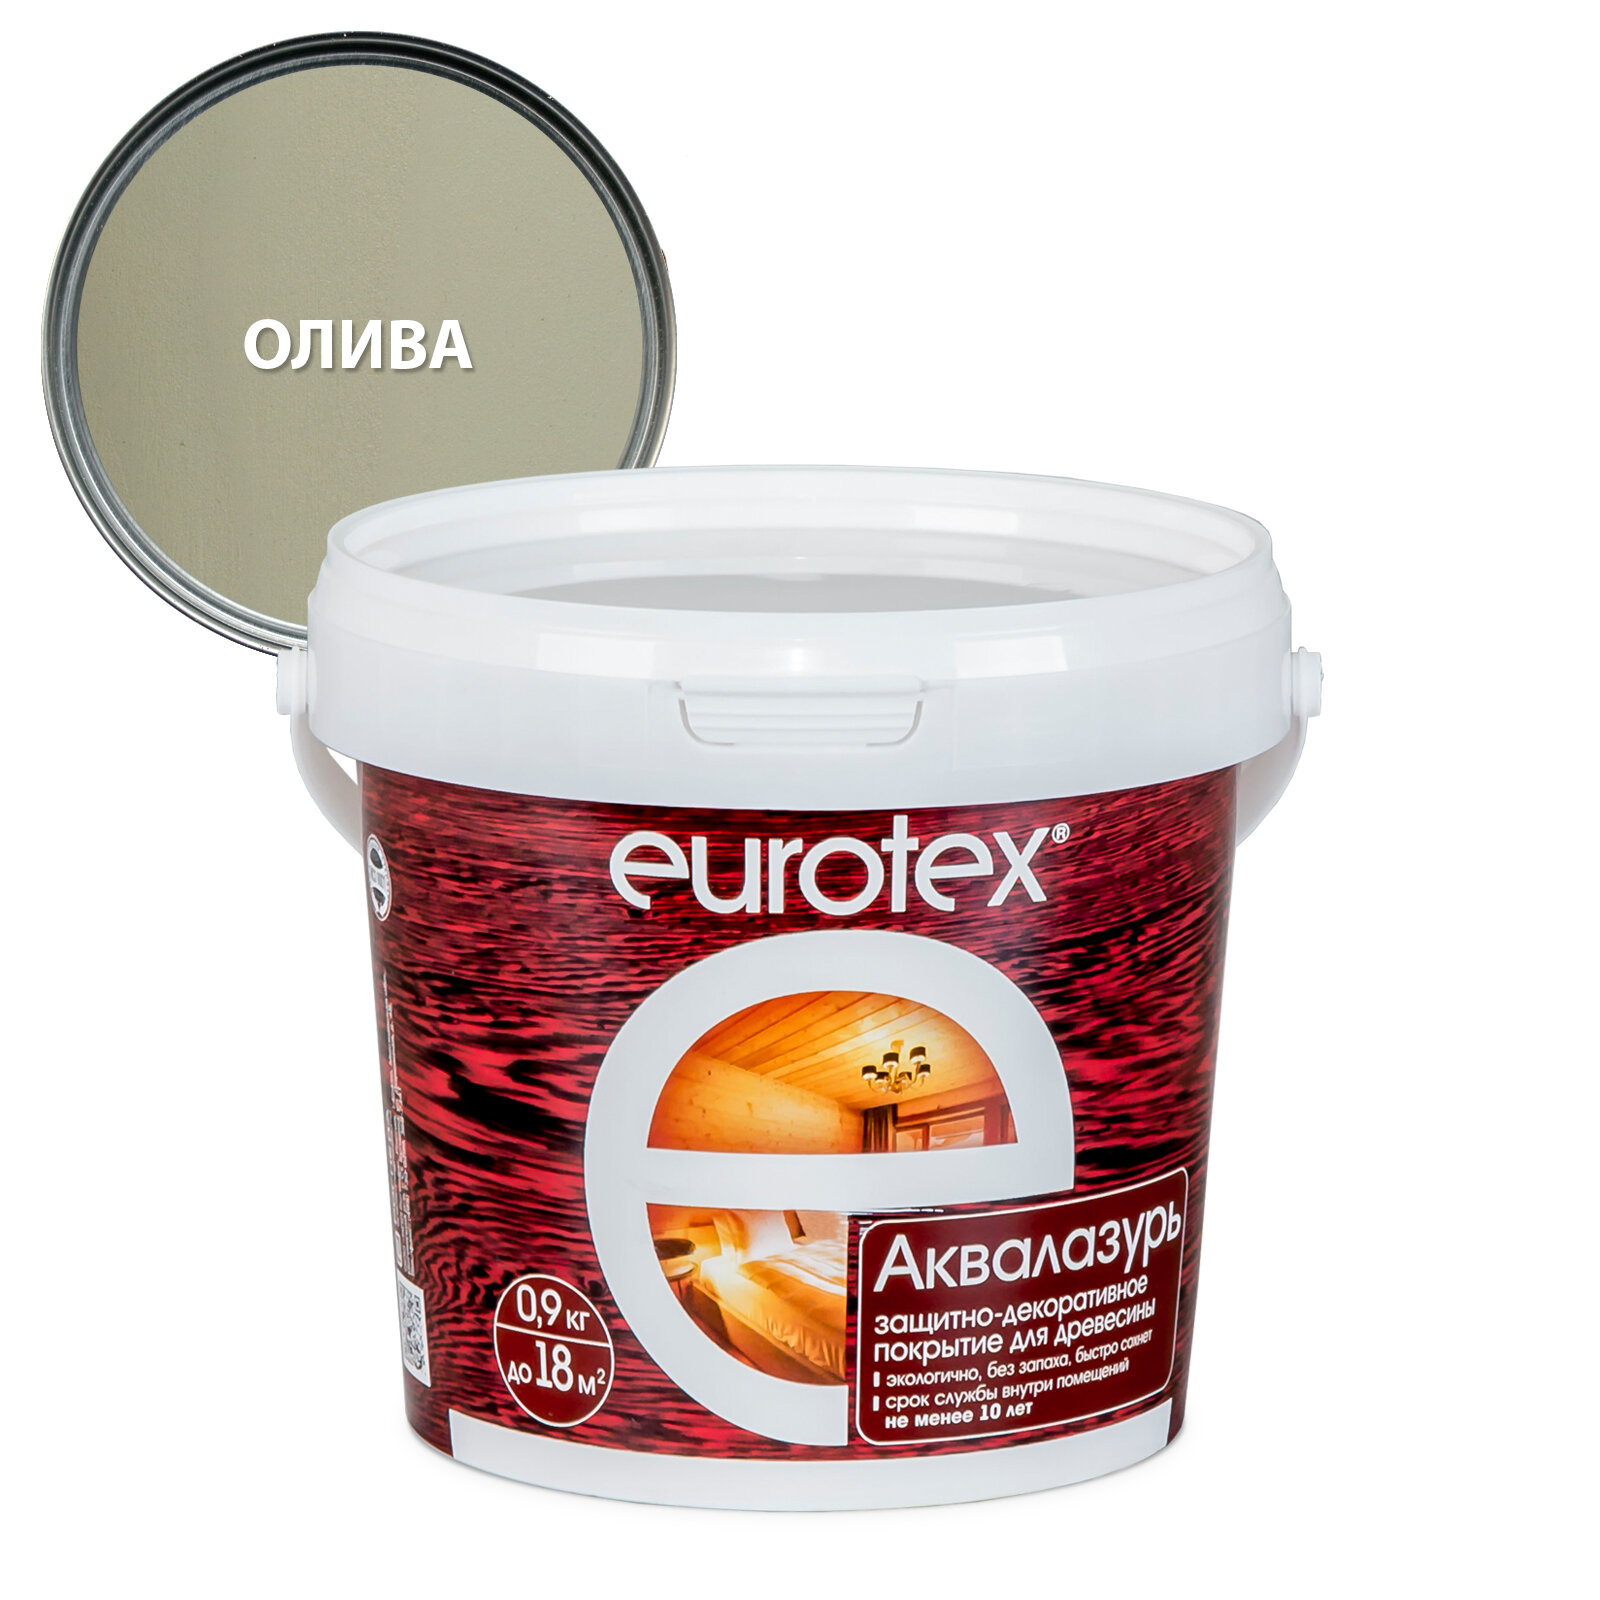 EUROTEX олива 0,9кг